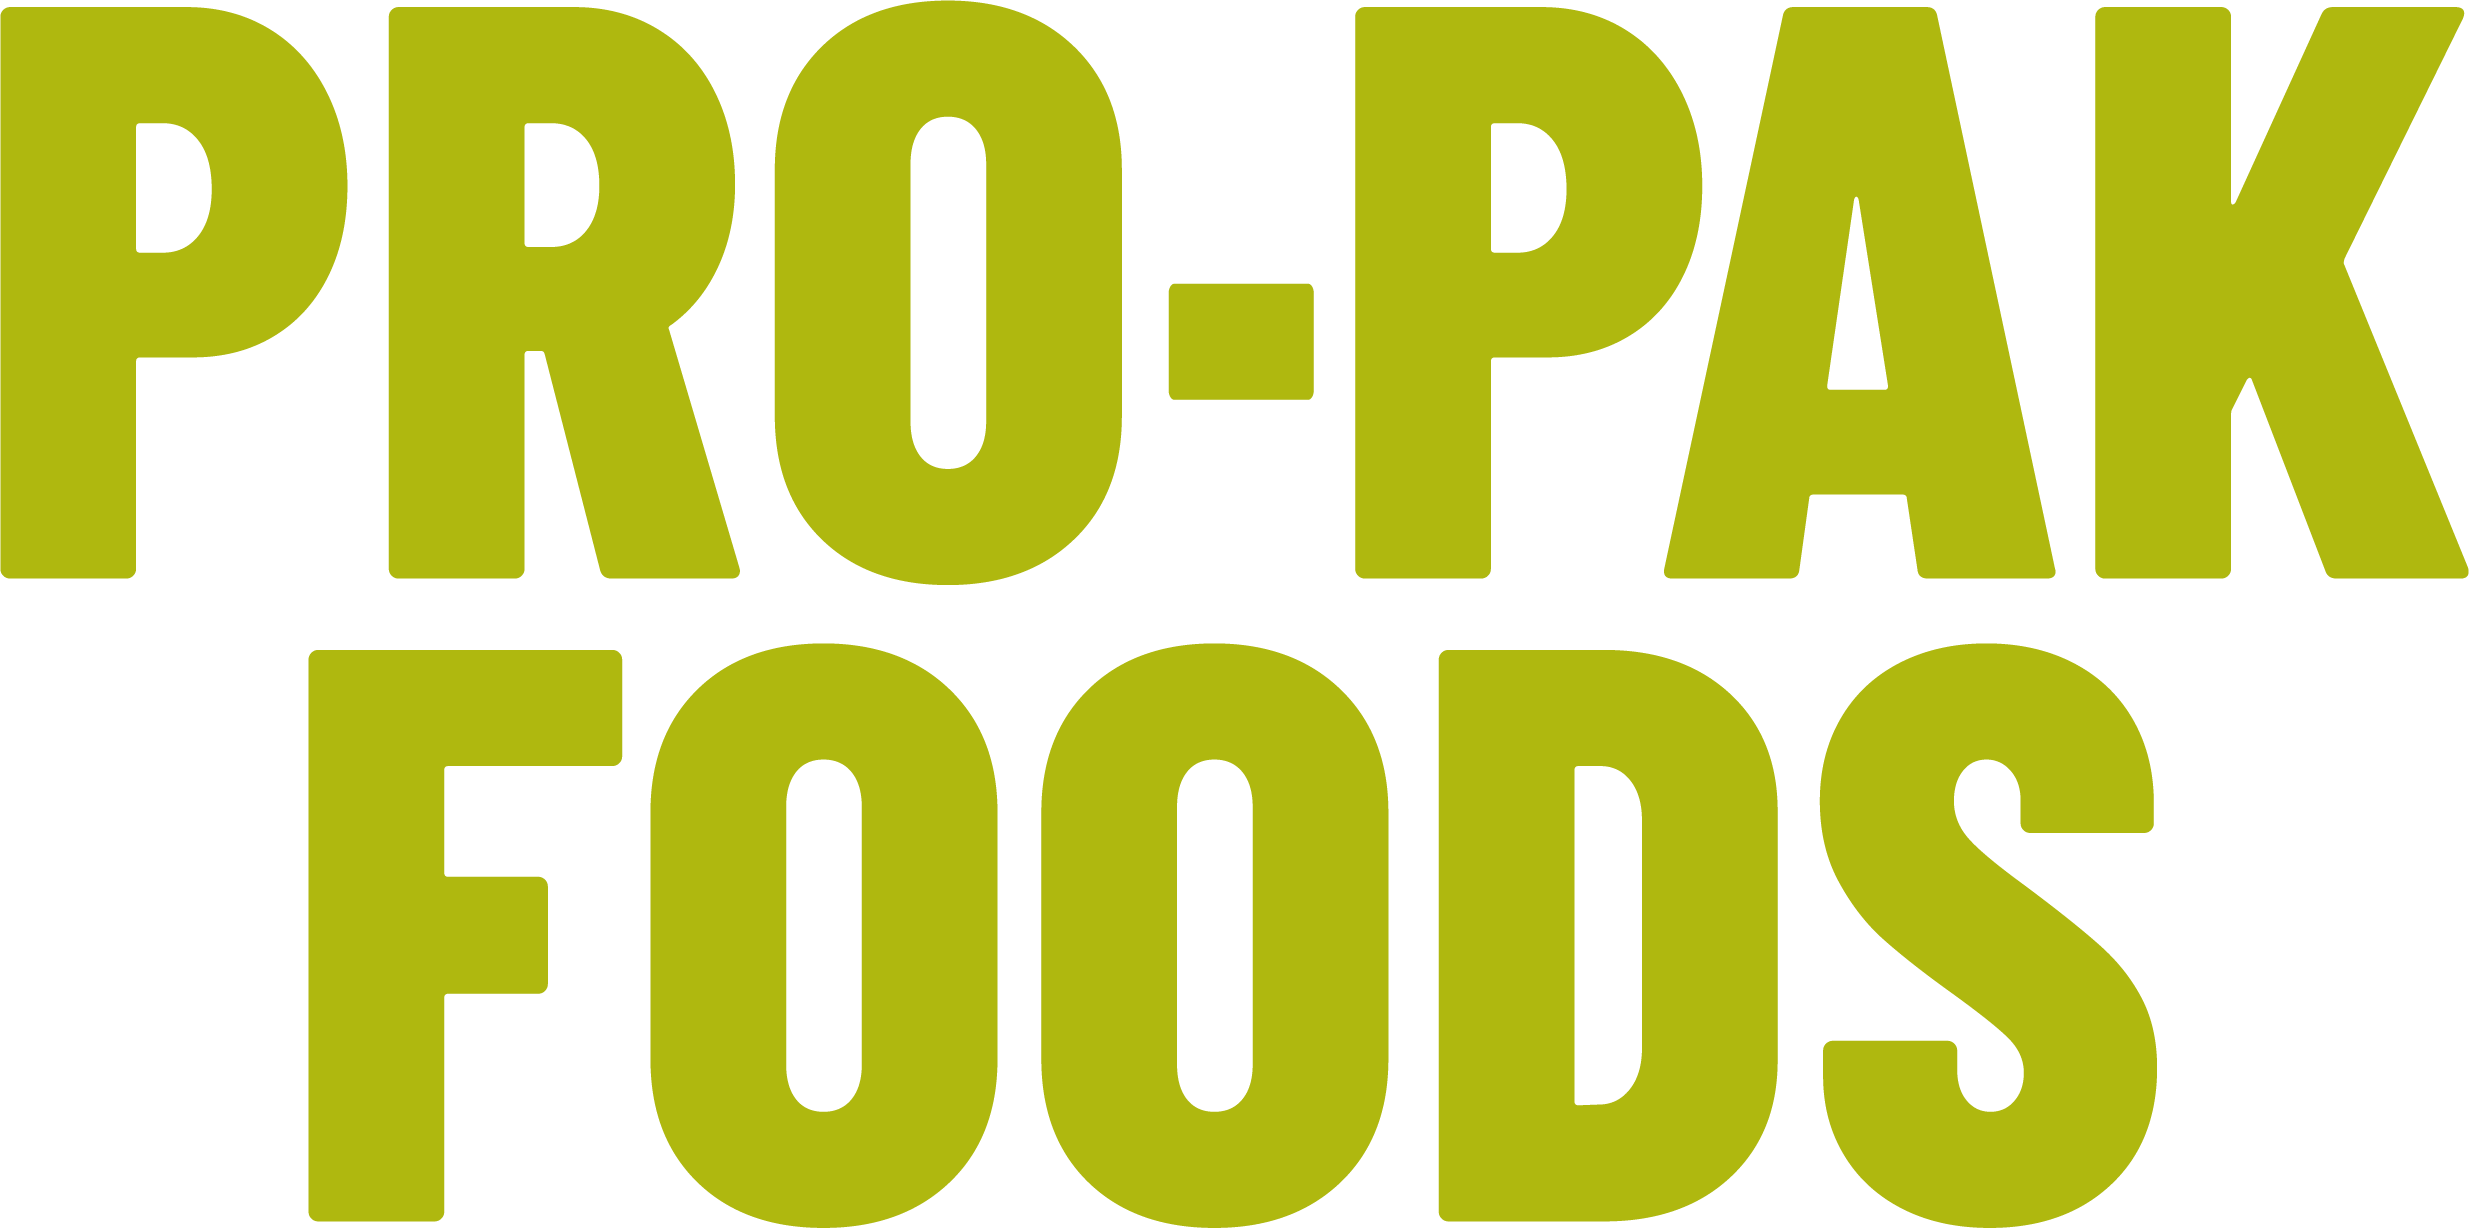 Pro-Pak Foods Ltd